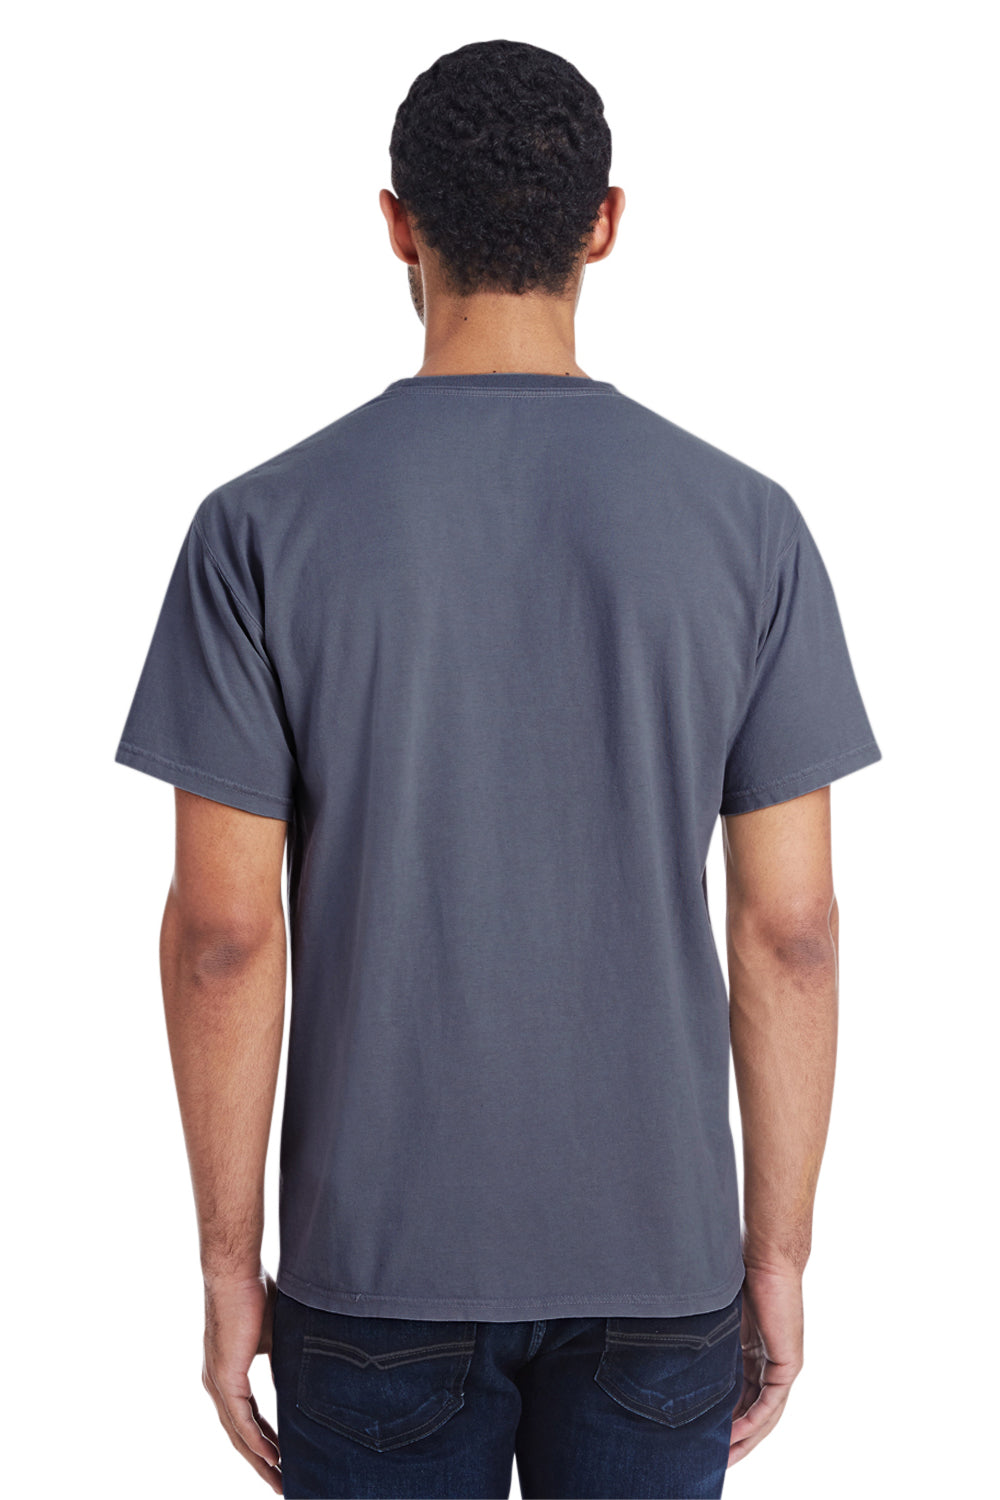 ComfortWash By Hanes GDH150 Mens Short Sleeve Crewneck T-Shirt w/ Pocket Slate Blue Back